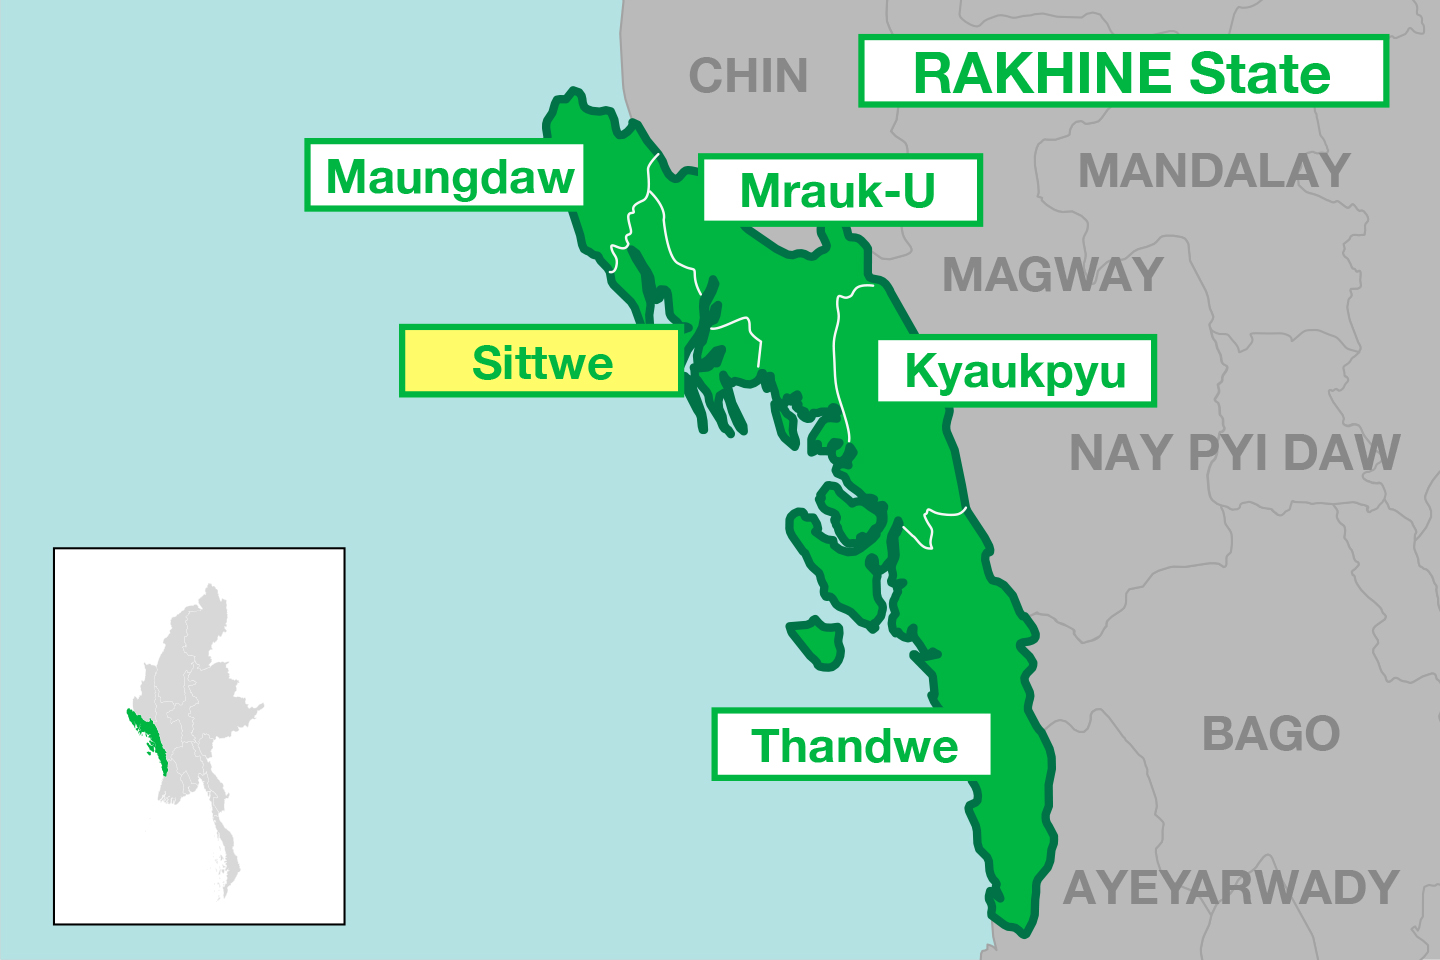 Rakhine